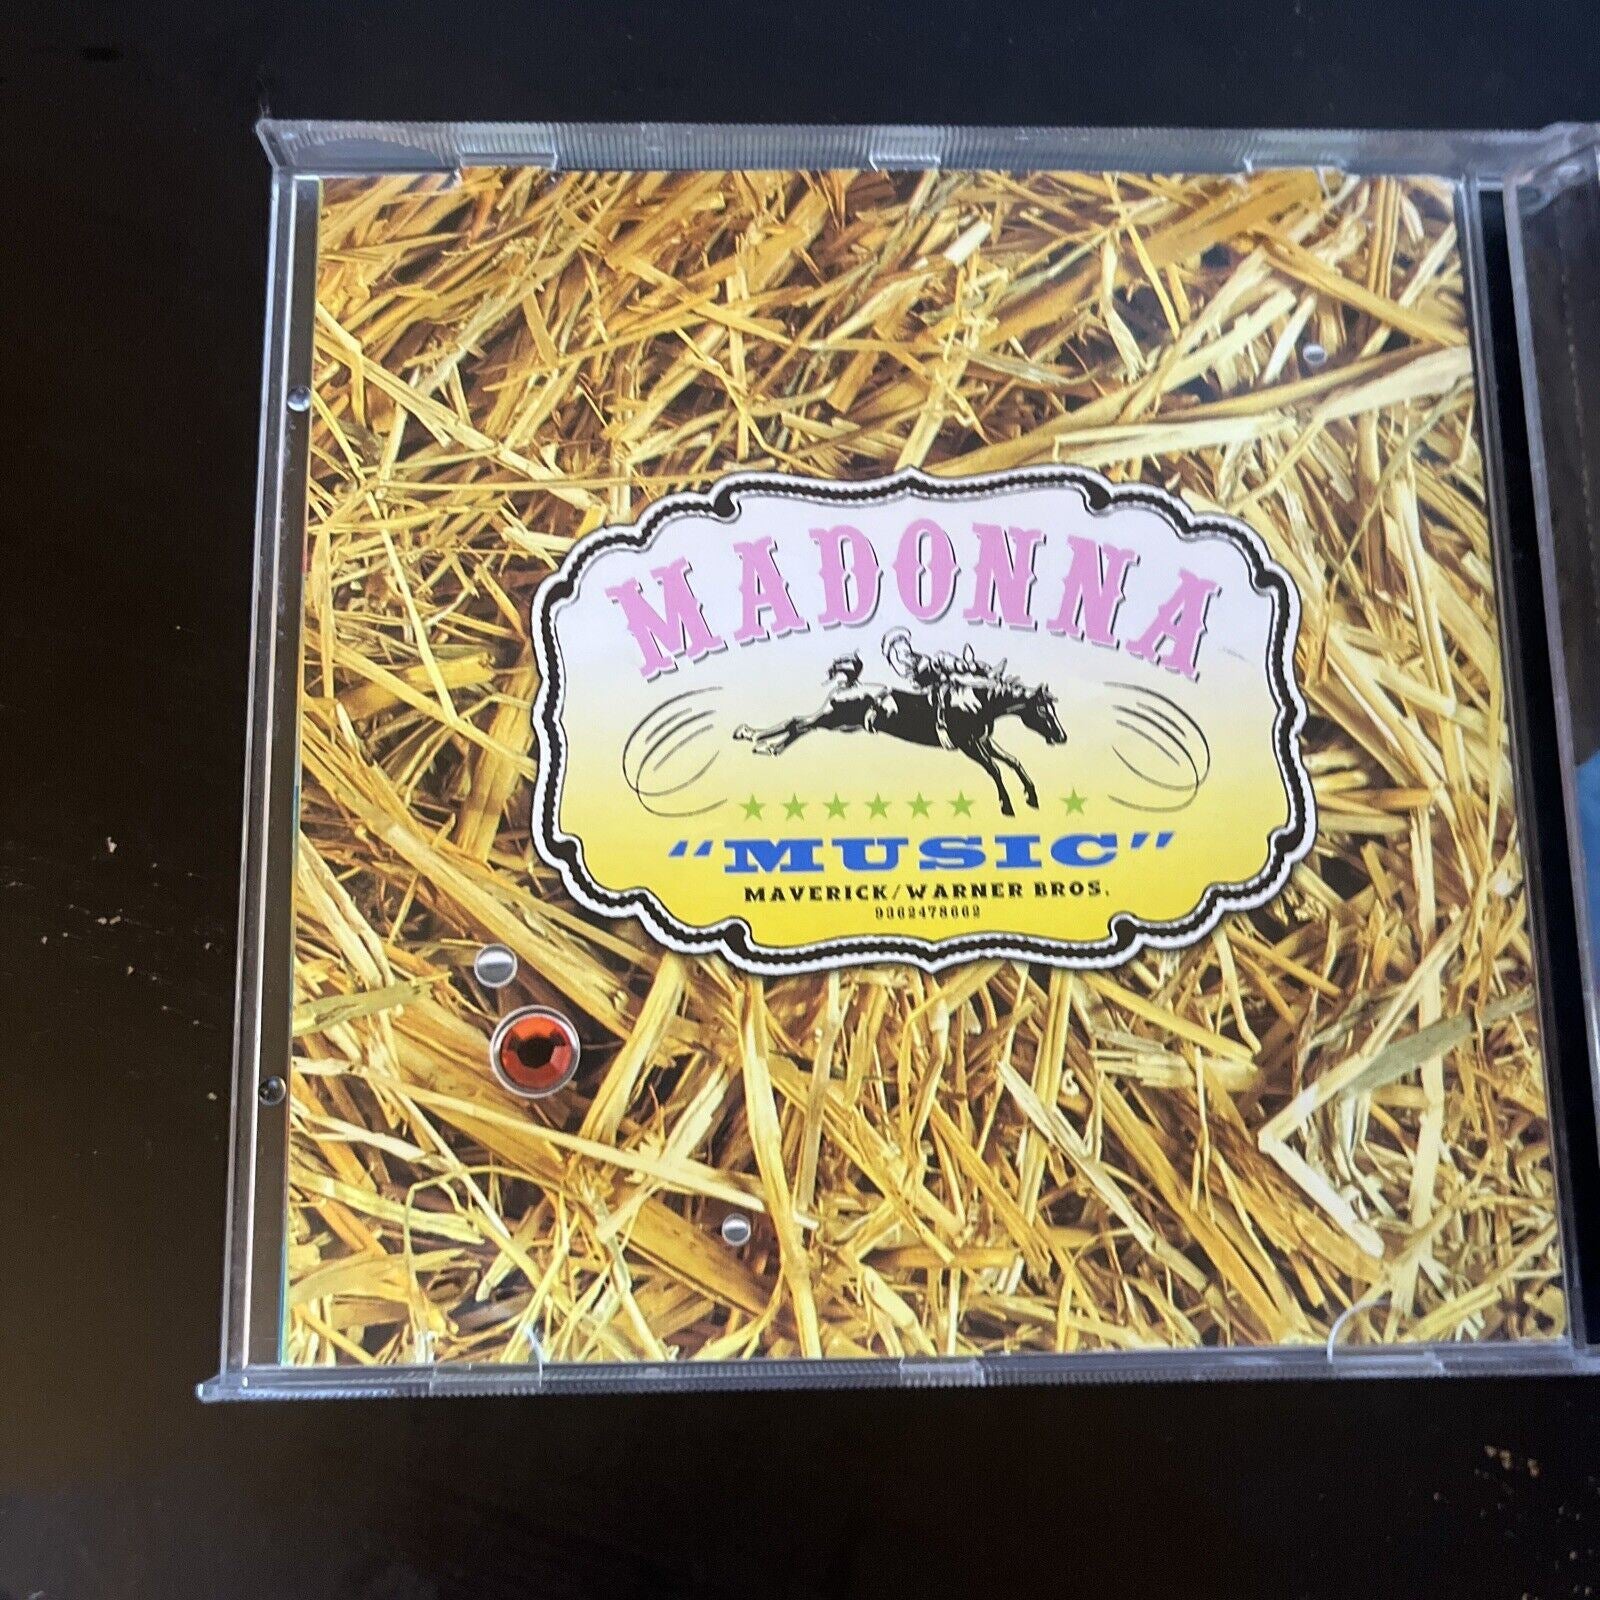 Music (album, Australian version, 2 bonus tracks) by MADONNA (CD)